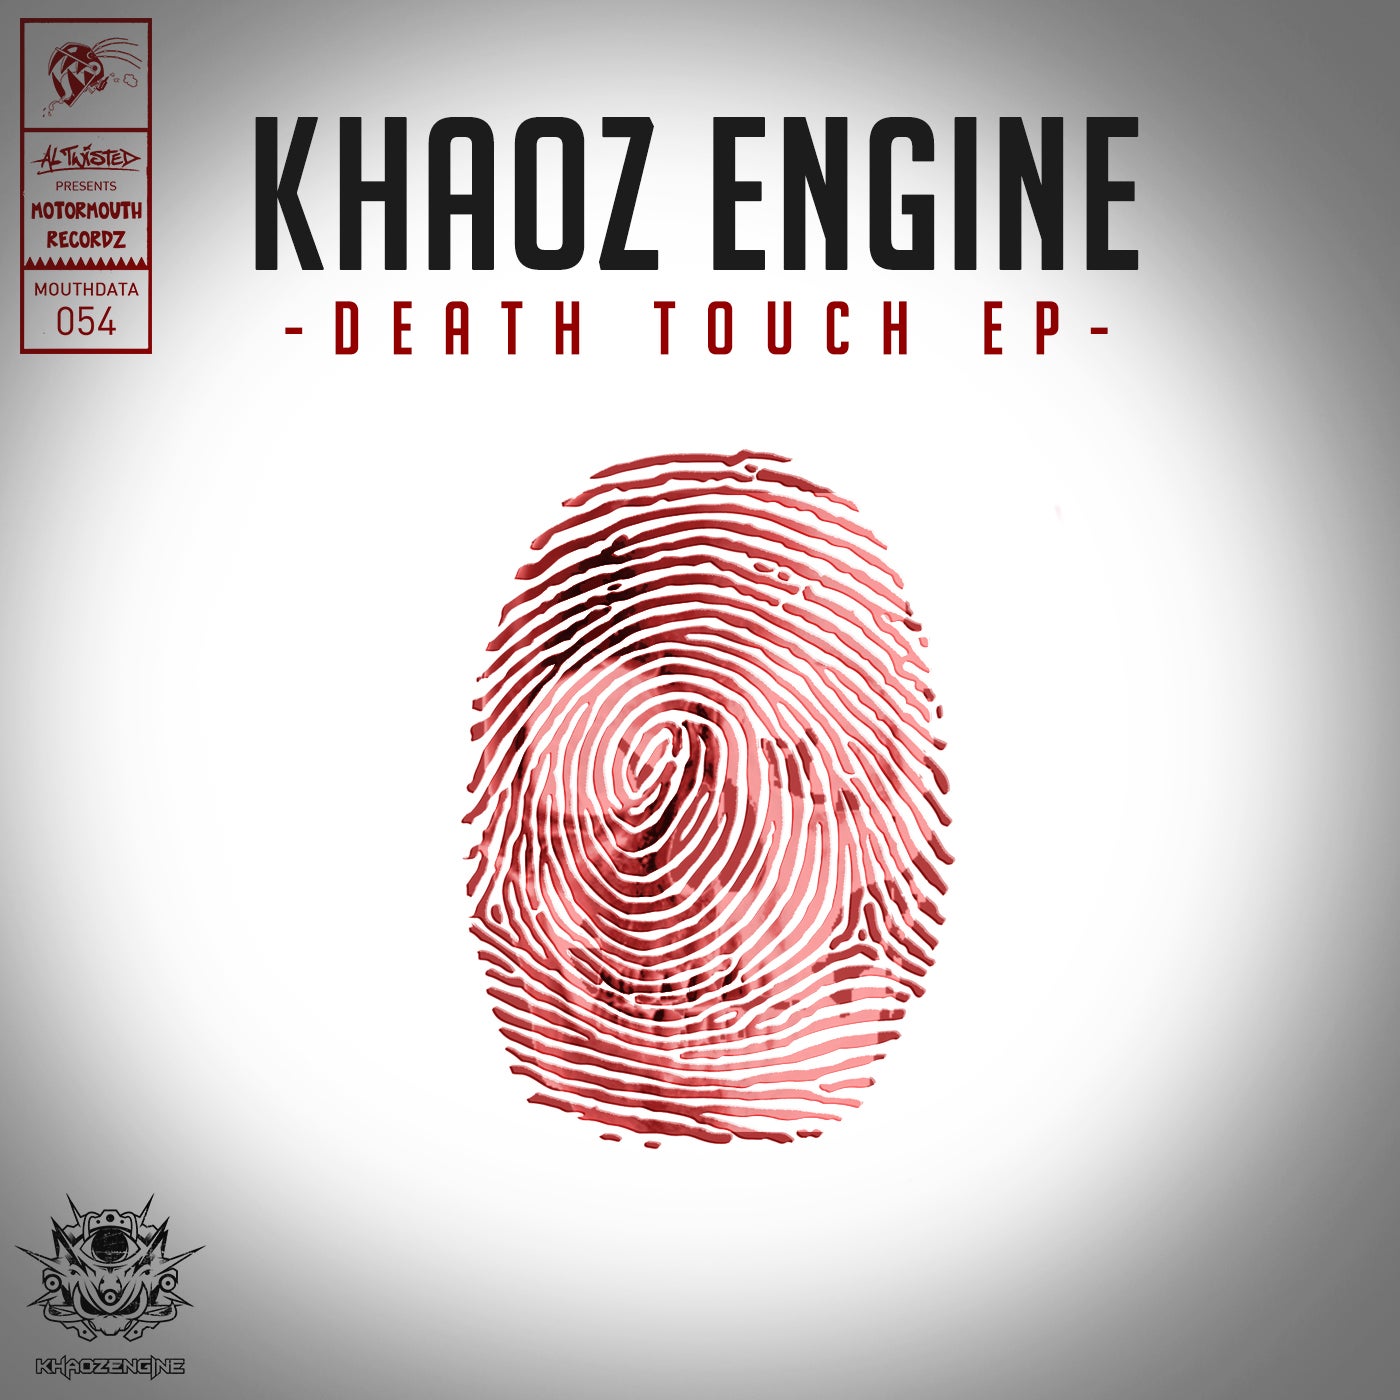 Khaoz Engine music download - Beatport